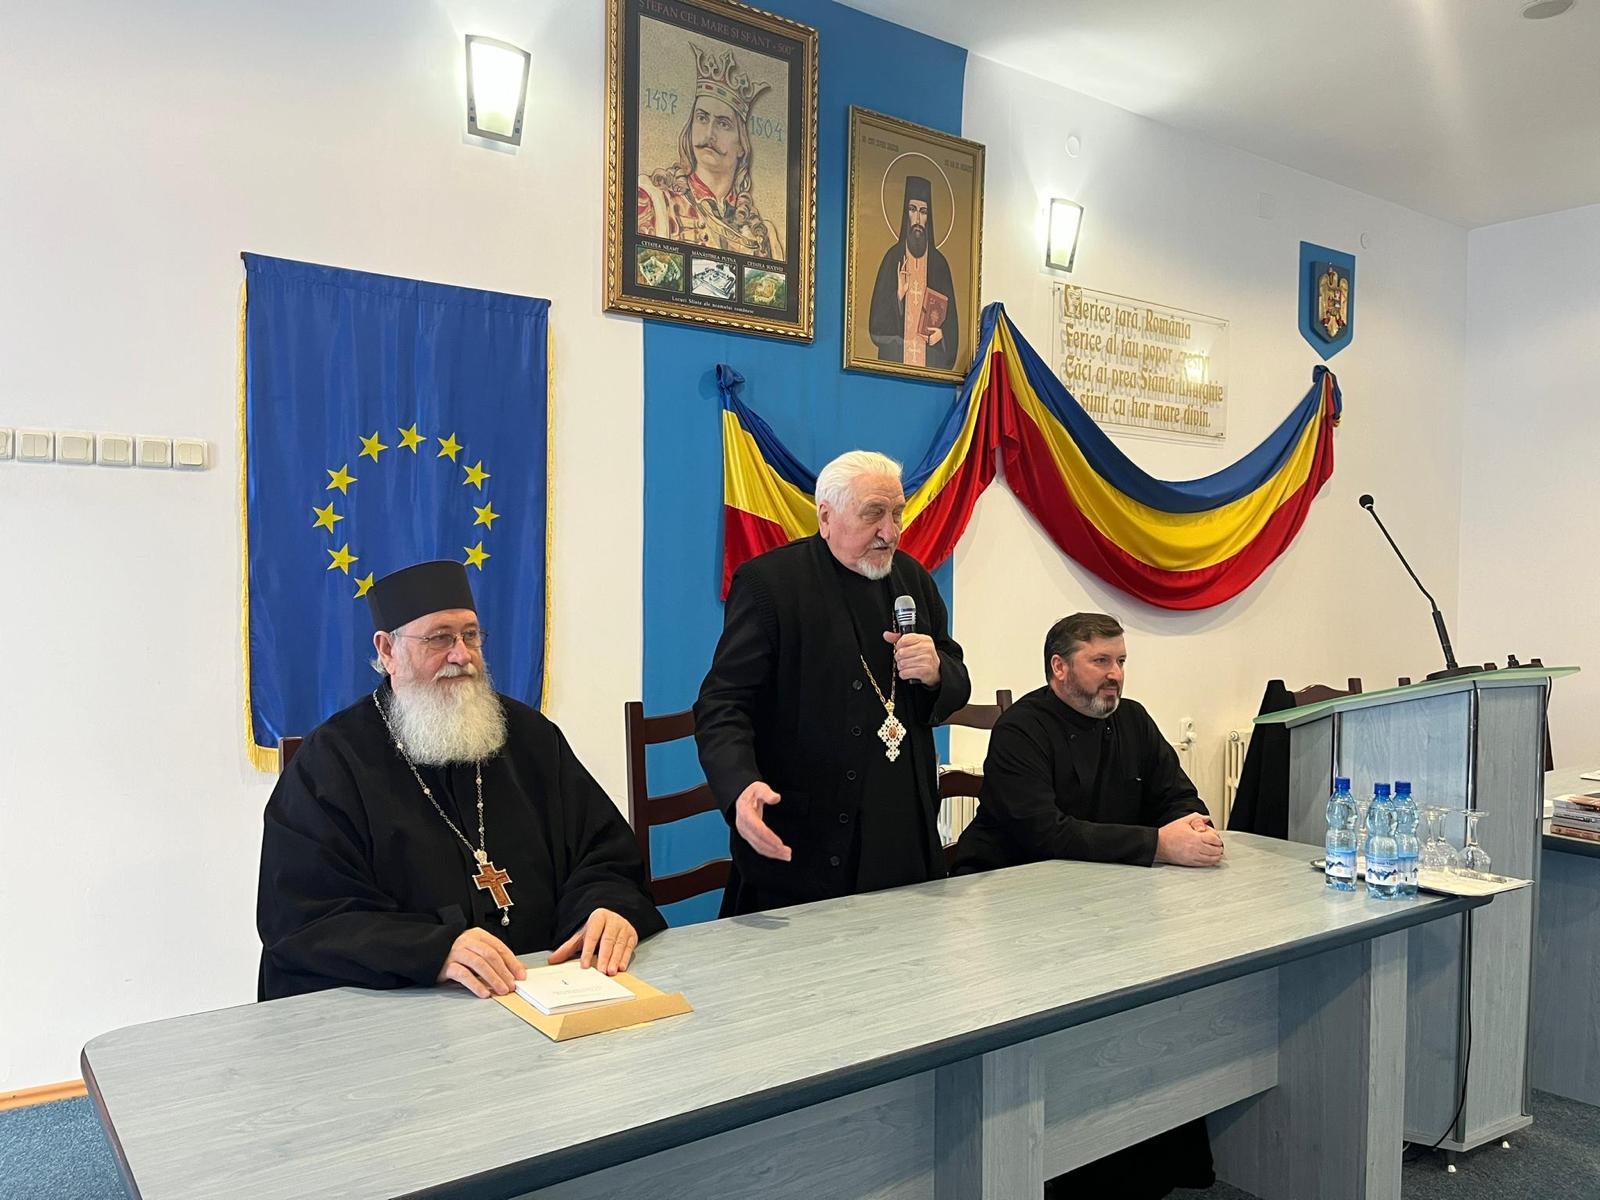 Prinos de cinstire adus Sfinților Trei Ierarhi la Seminarul Teologic de la Mănăstirea Neamț